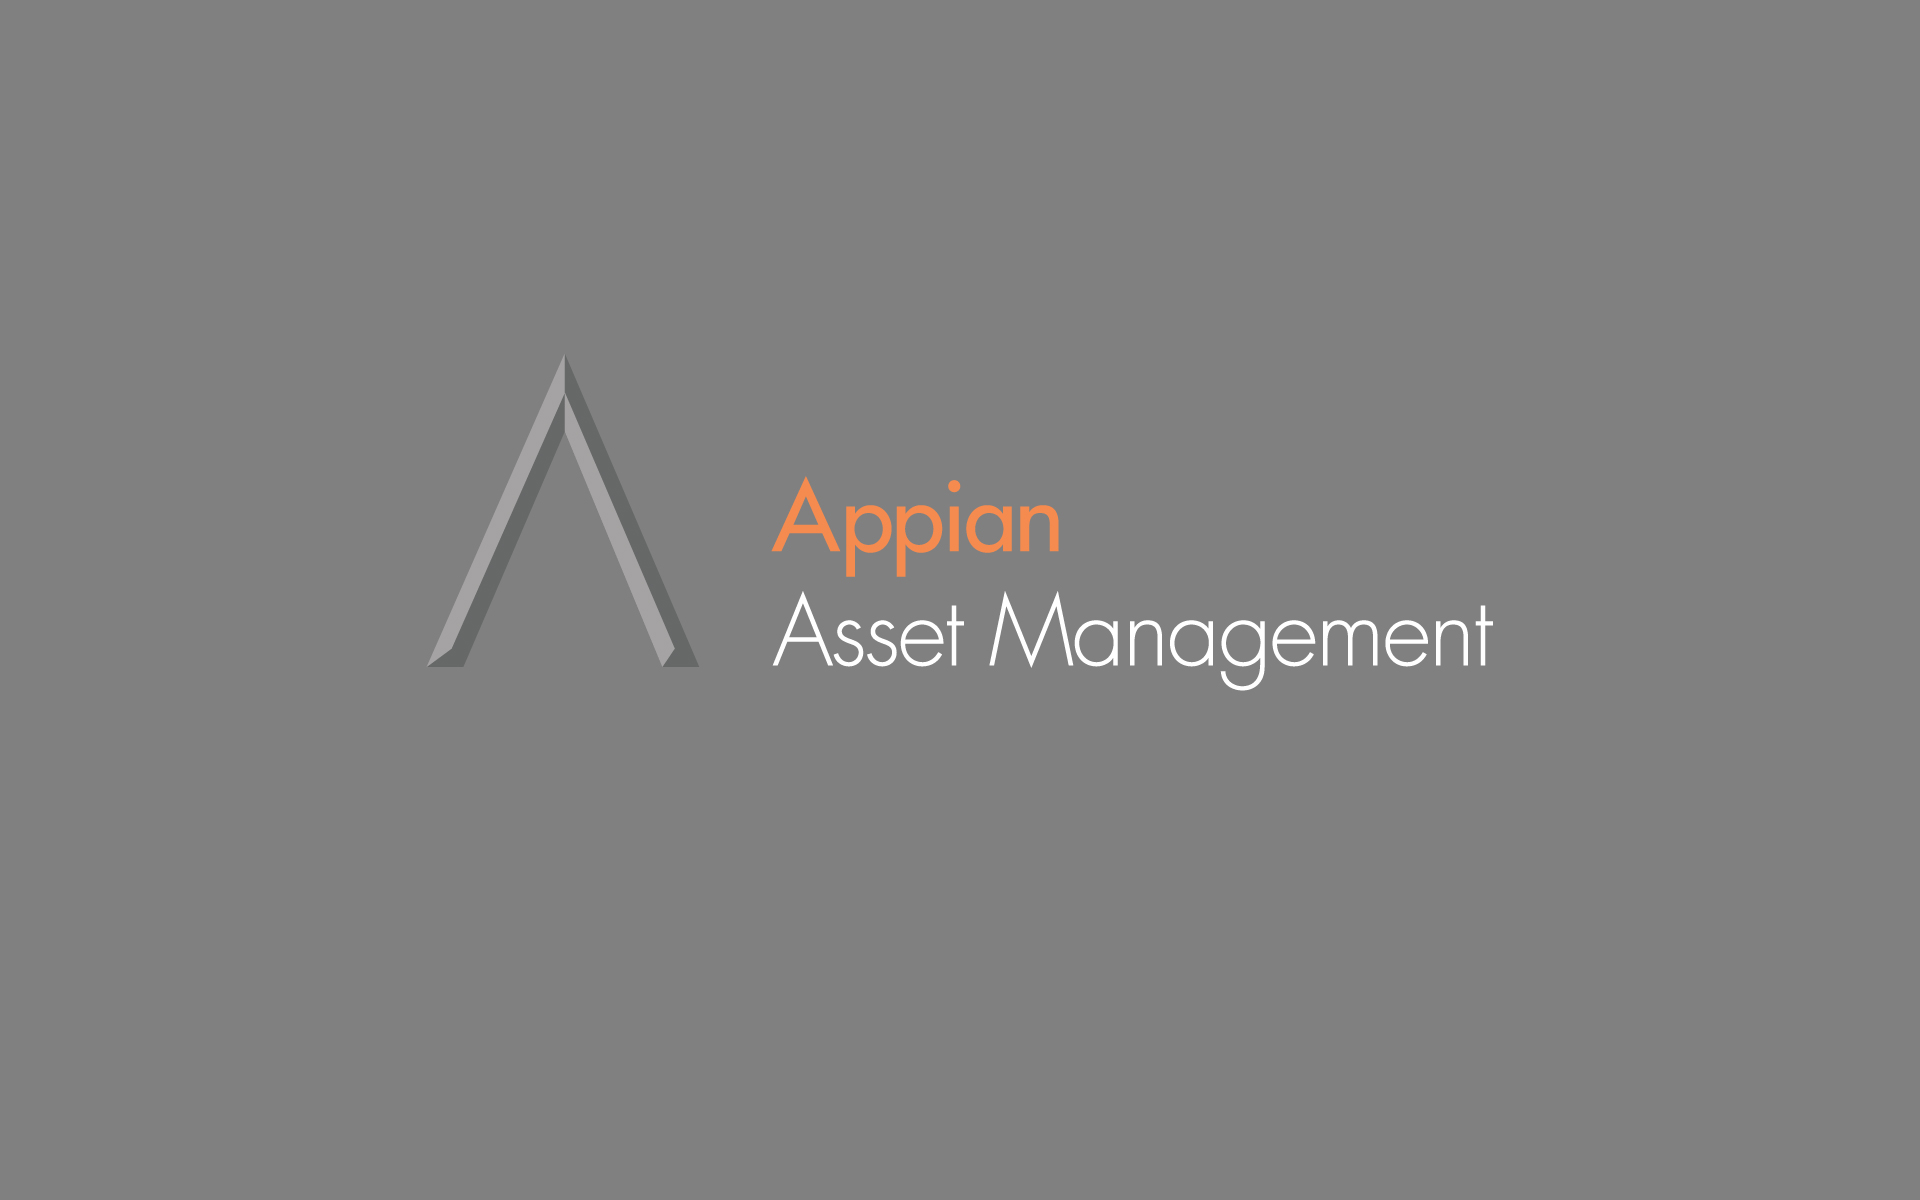 Appian Asset Management logo negative